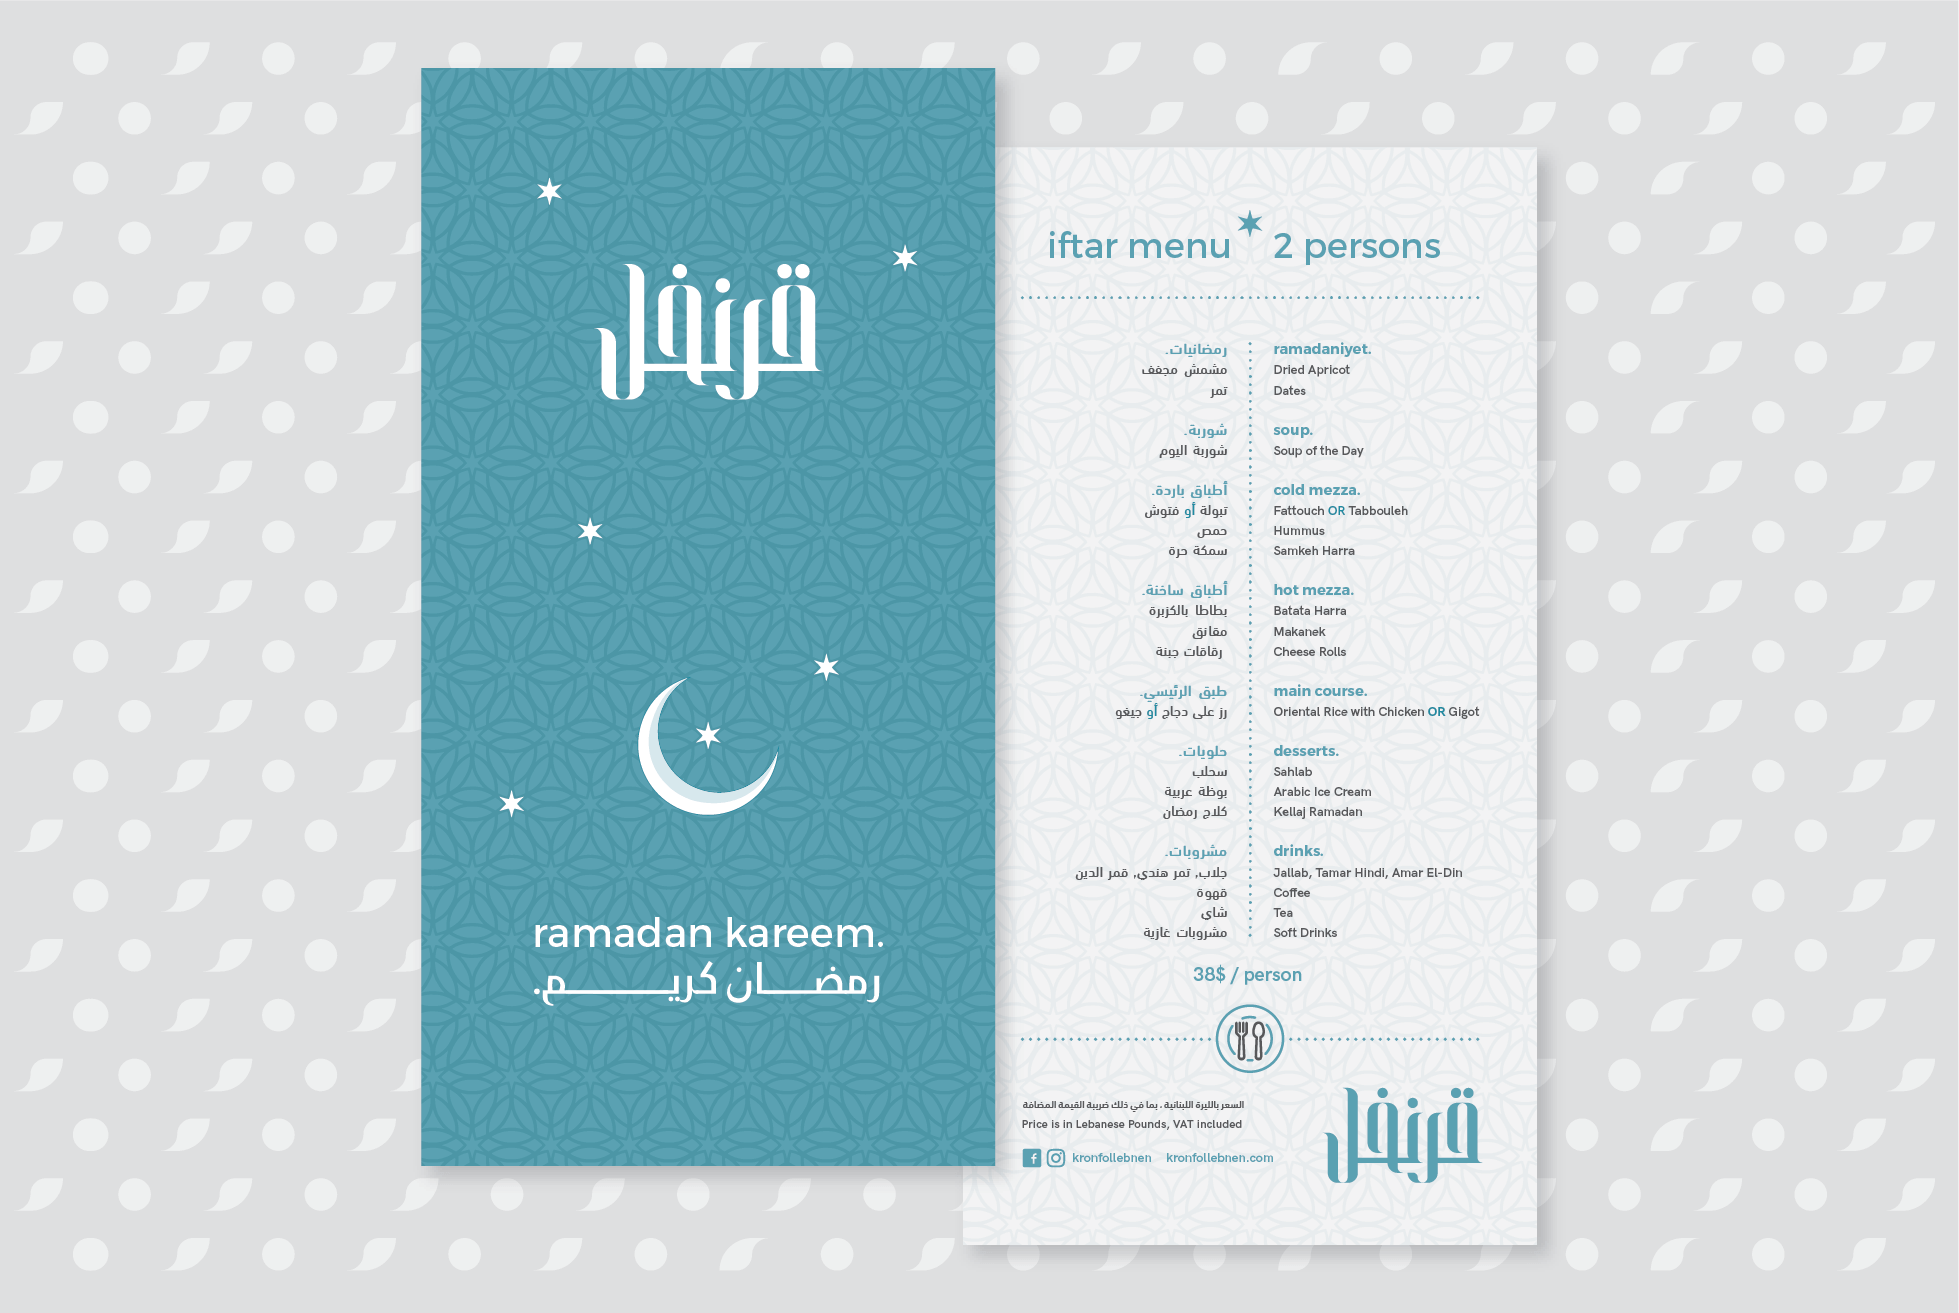 kronfol_rebranding_ramadan-set-menu